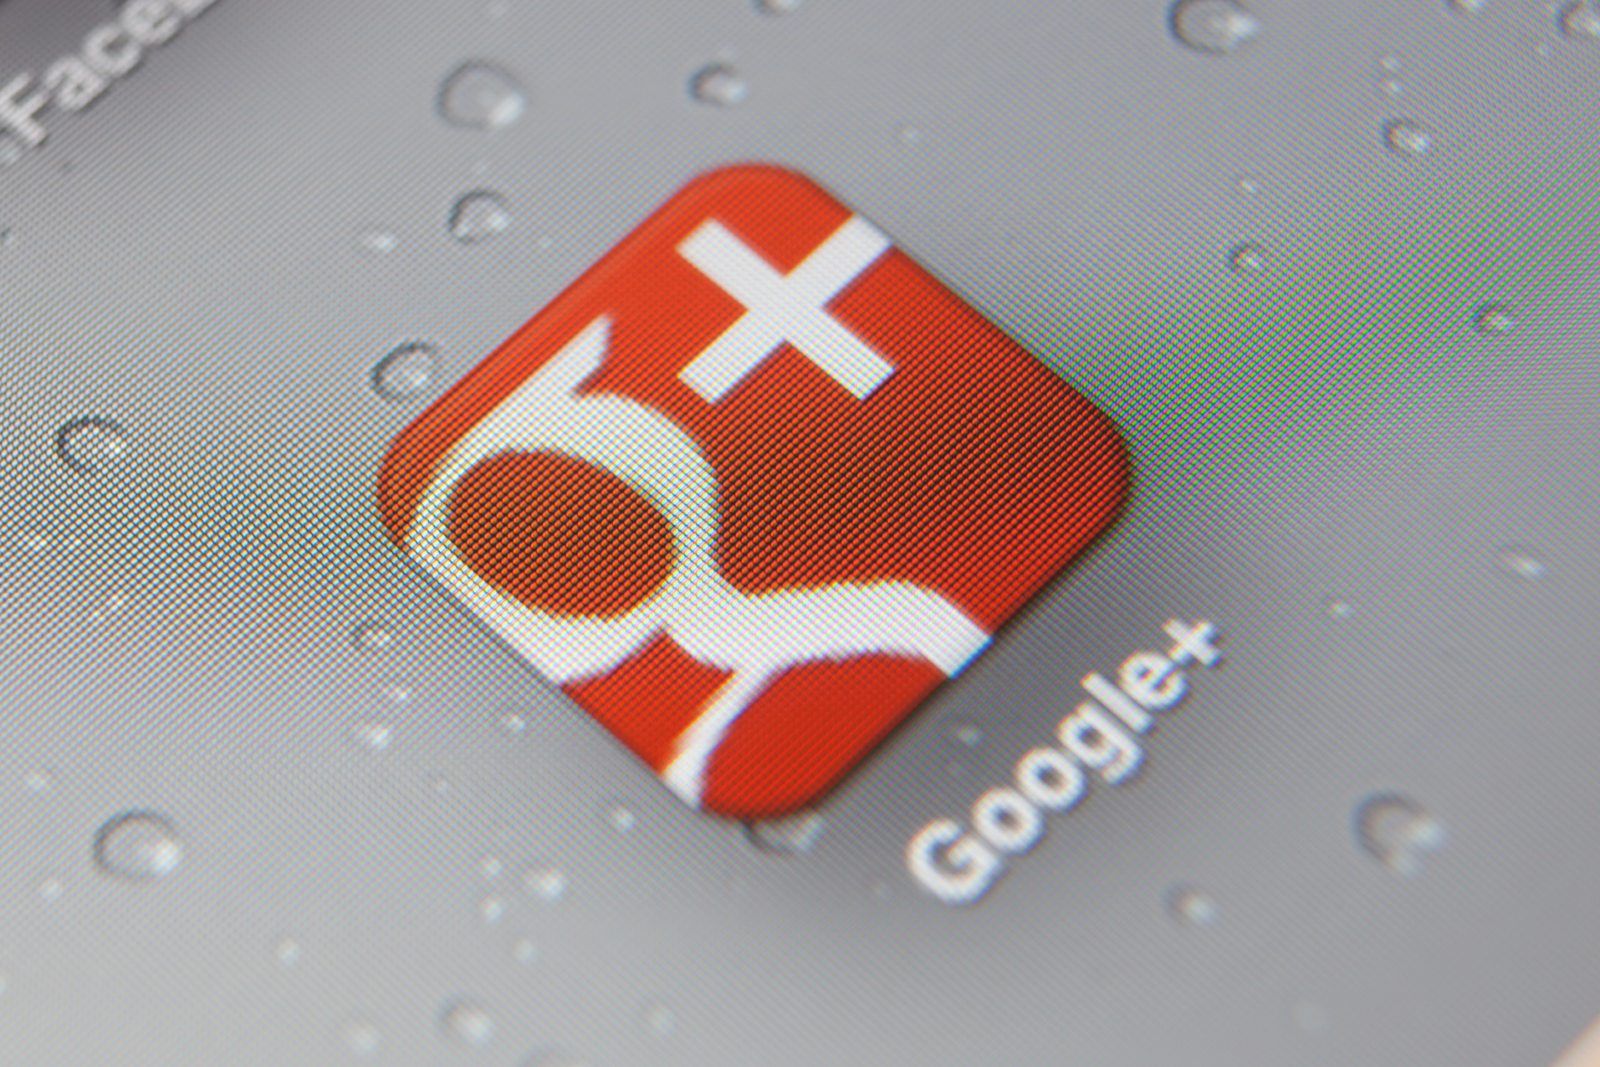 Screen shows Google+ app - Google Plus settlement